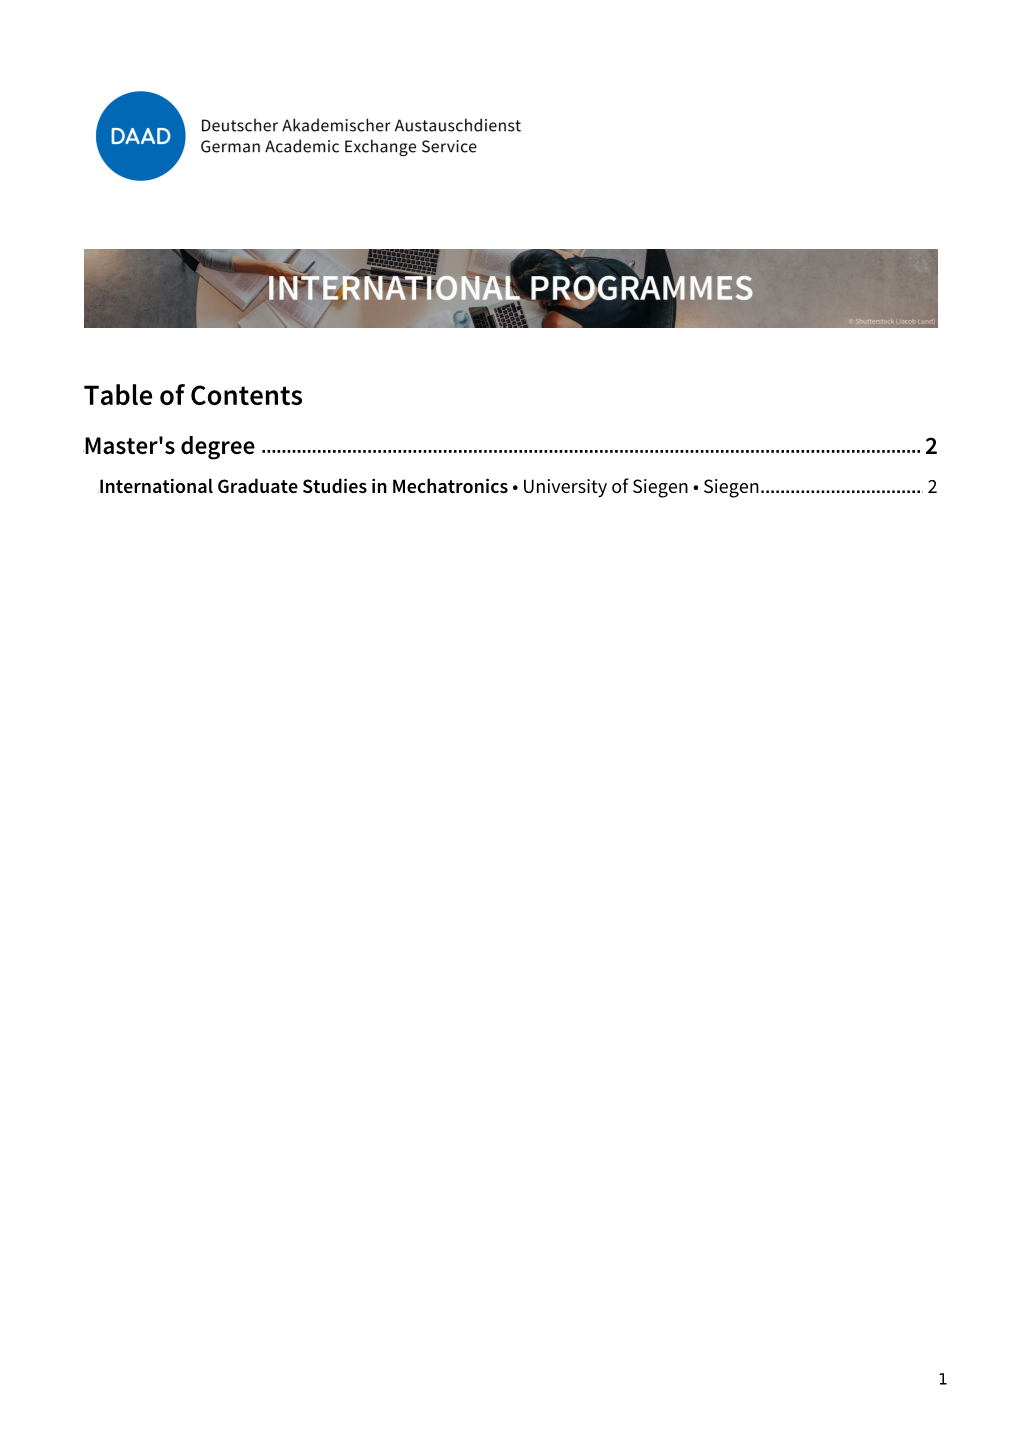 Table of Contents Master's Degree 2 International Graduate Studies in Mechatronics • University of Siegen • Siegen 2